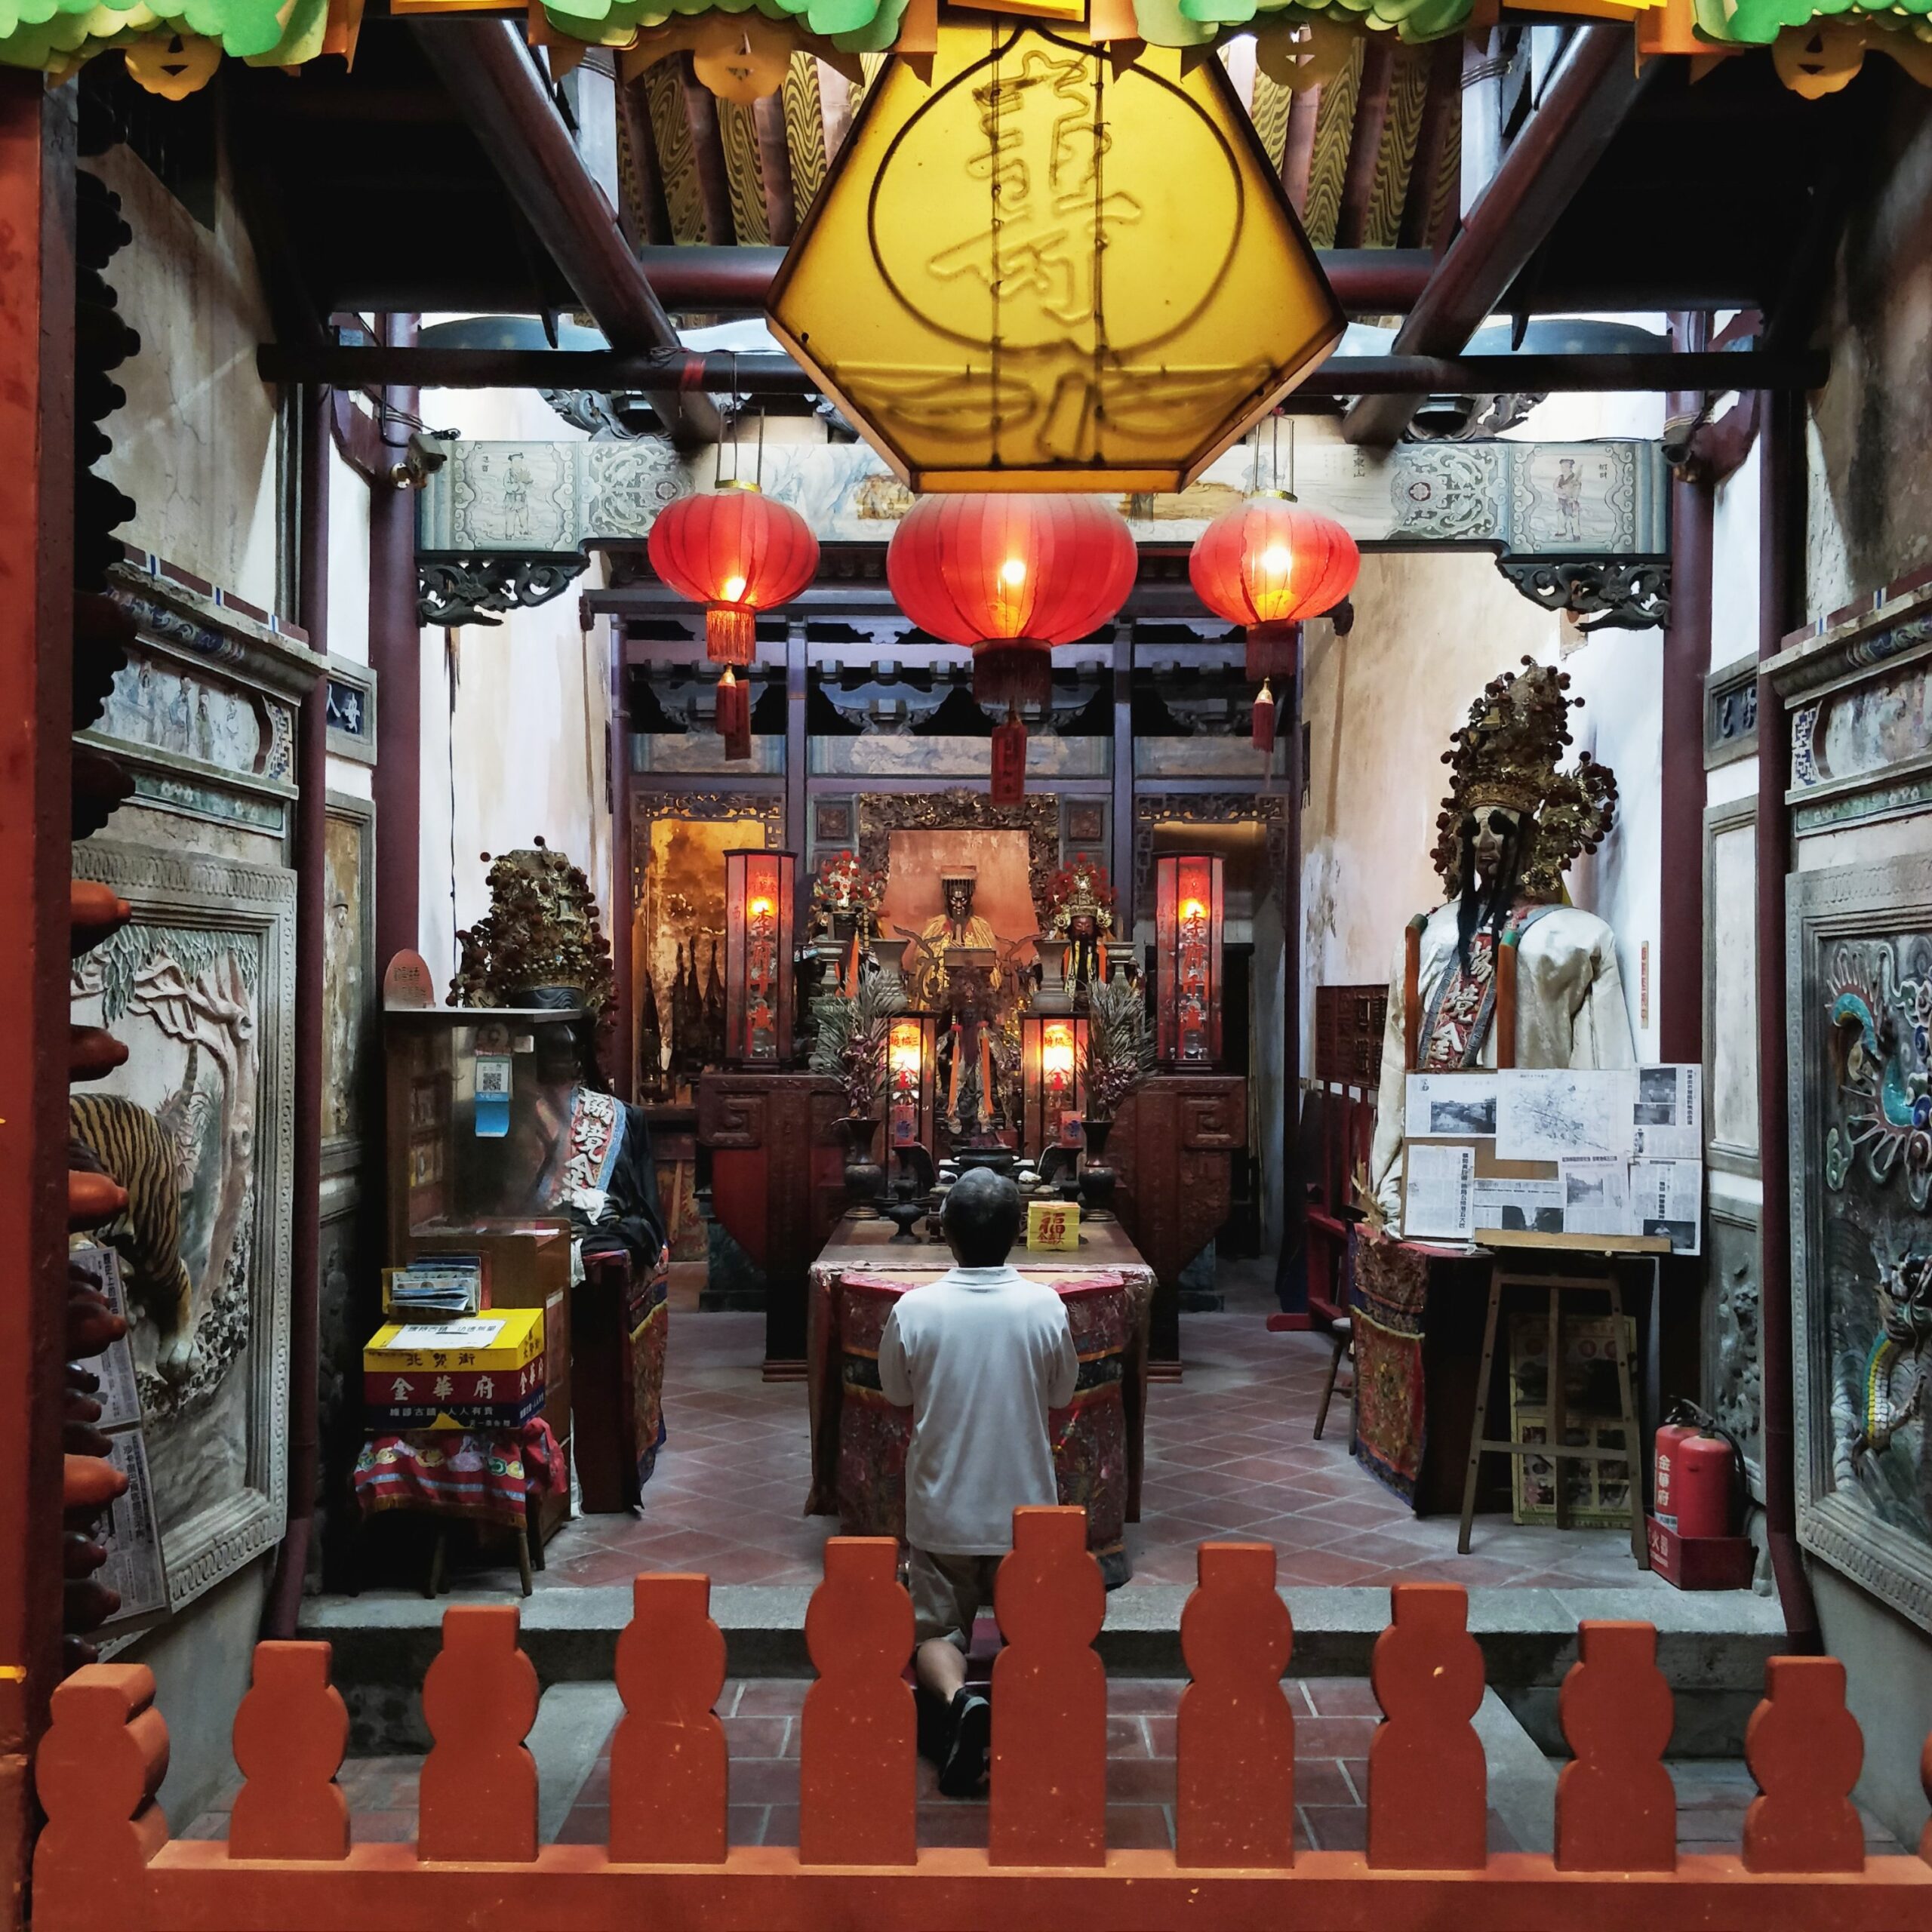 Temple, Tainan